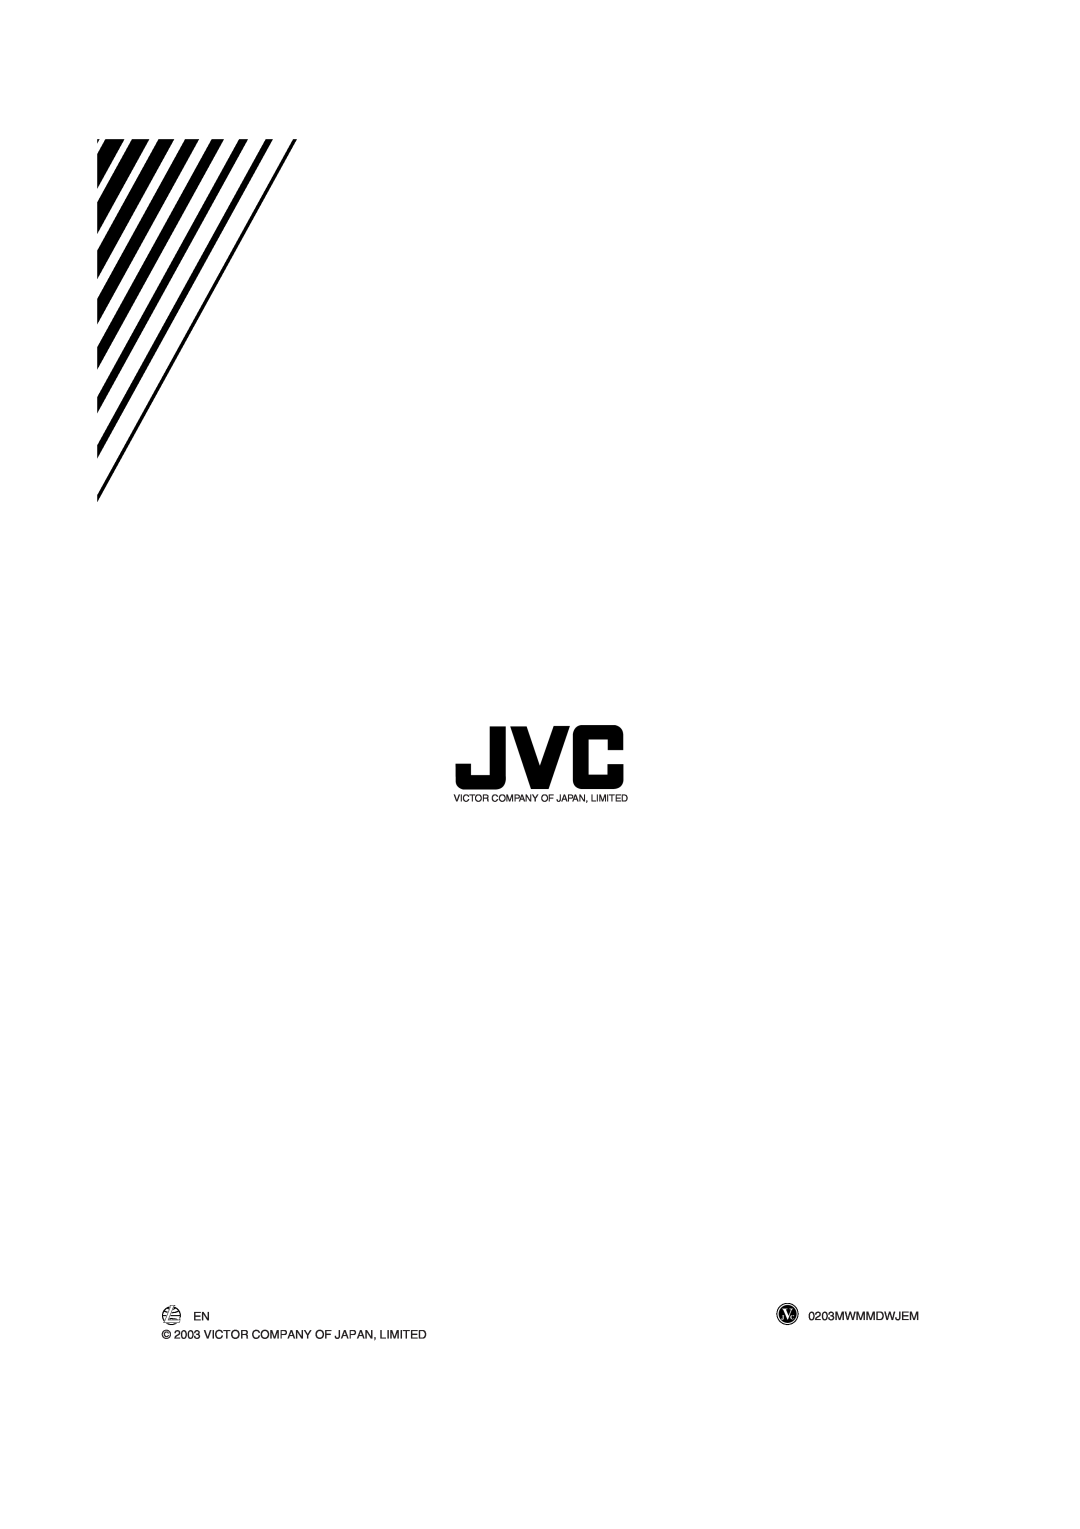 JVC UX-P55 manual 0203MWMMDWJEM, Victor Company Of Japan, Limited 